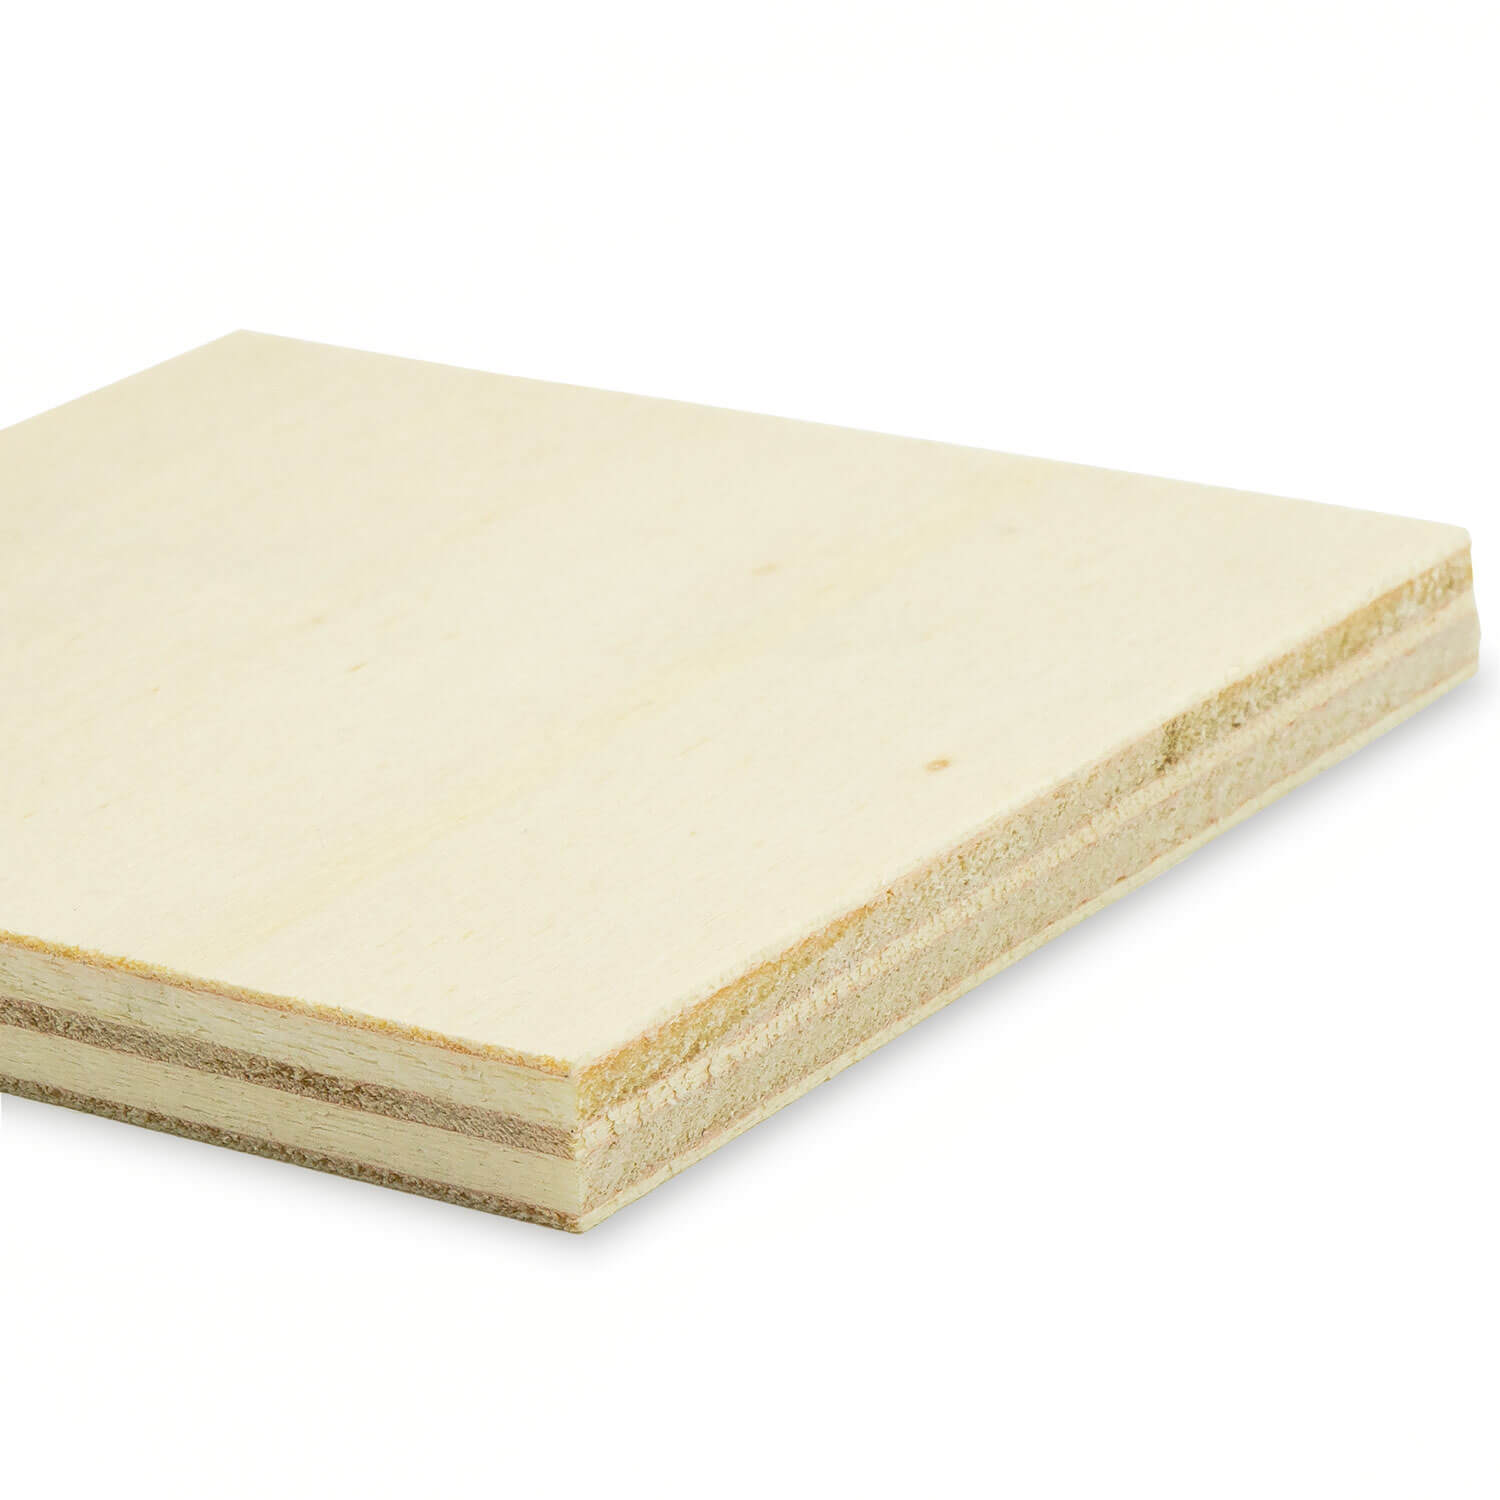 Sperrholz zuschnitt - Die TOP Produkte unter allen Sperrholz zuschnitt!